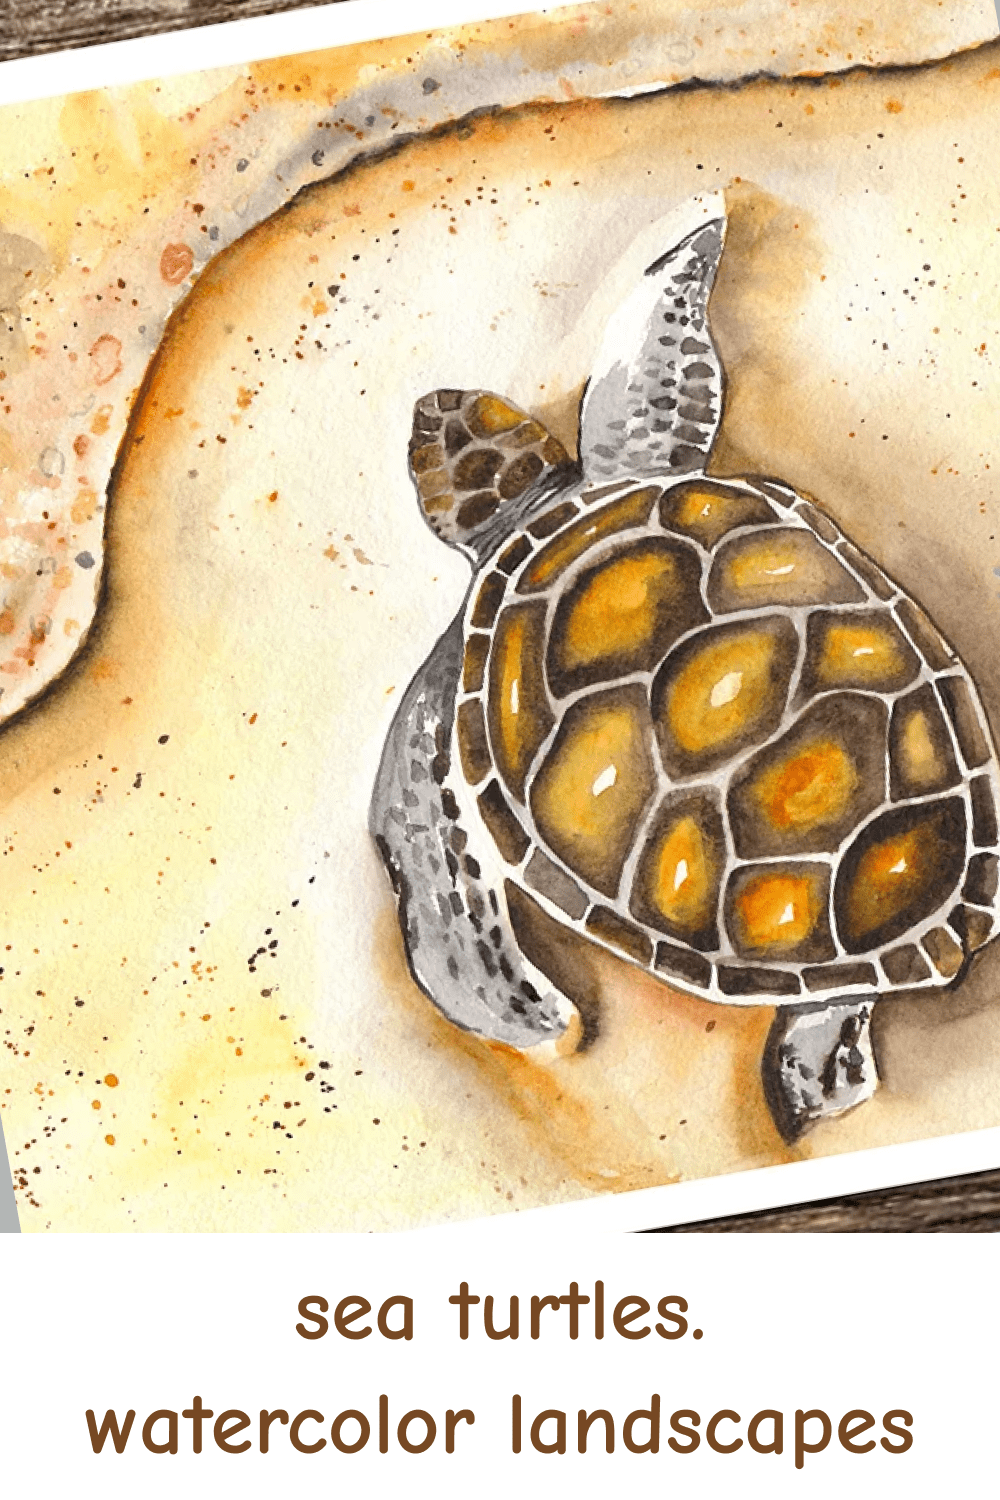 04 sea turtles. watercolor landscapes 1000h1500